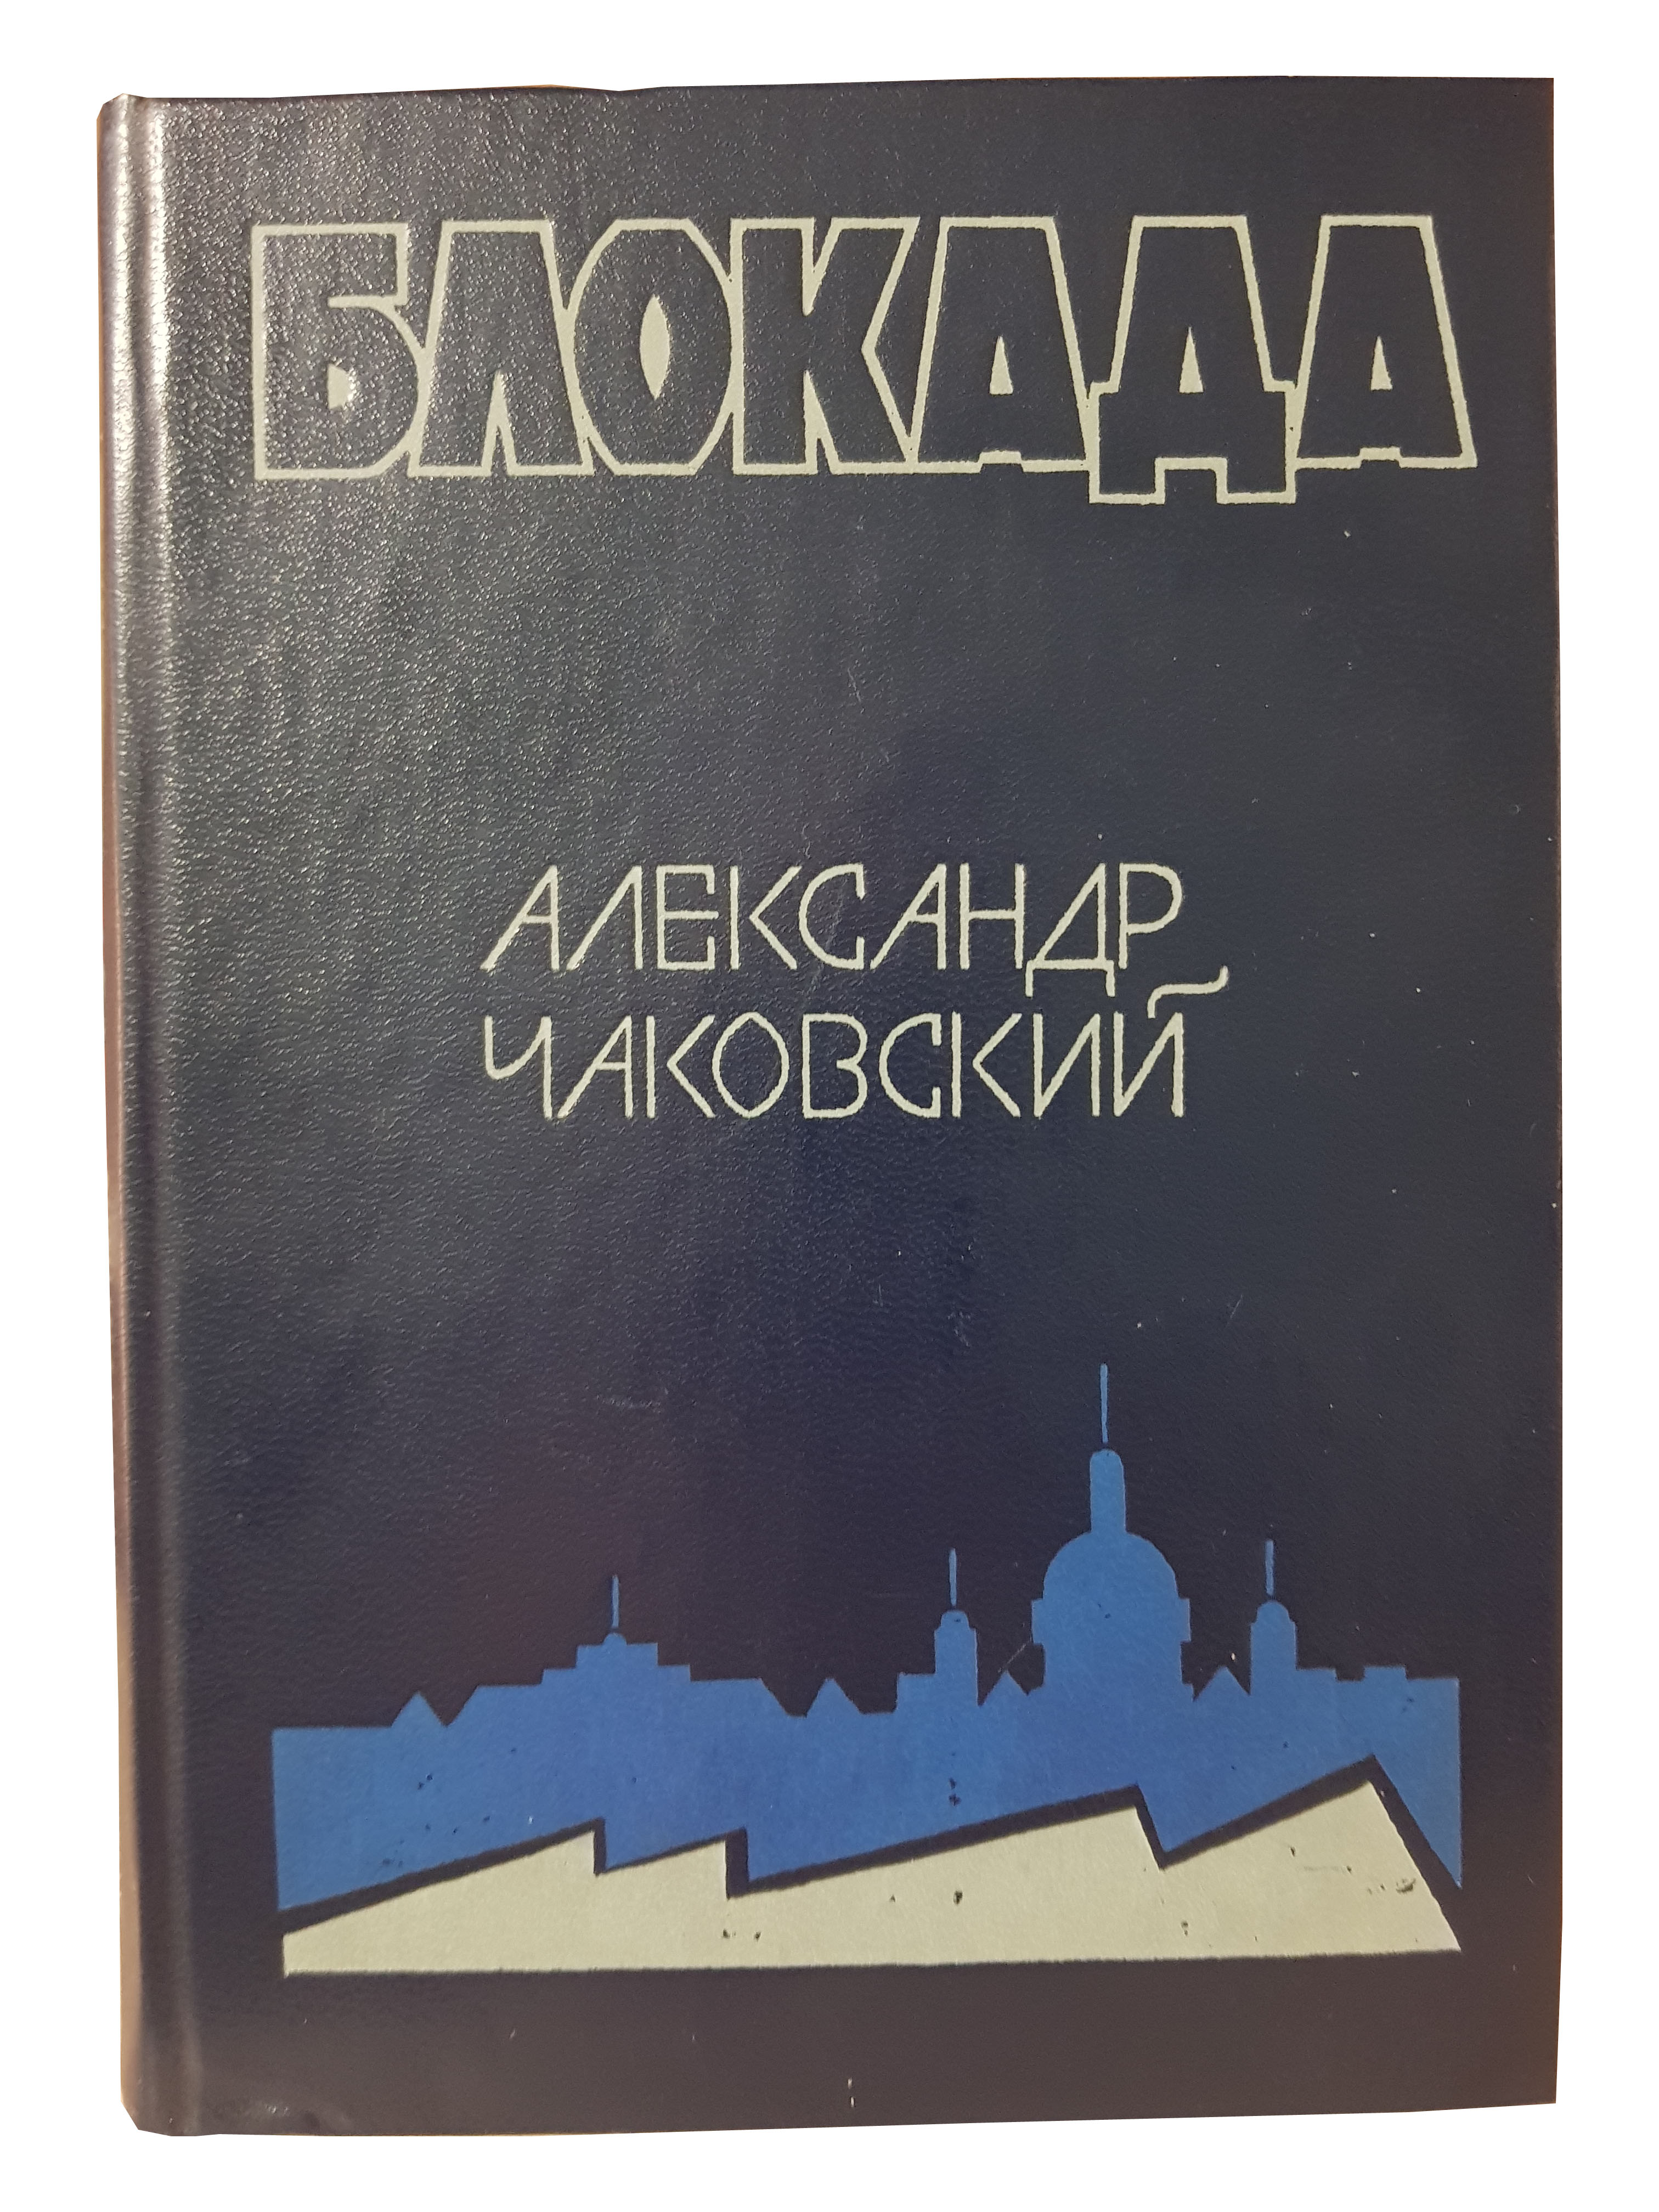 Чаковский А.Б. (Блокада. Книга 1 и 2).jpg